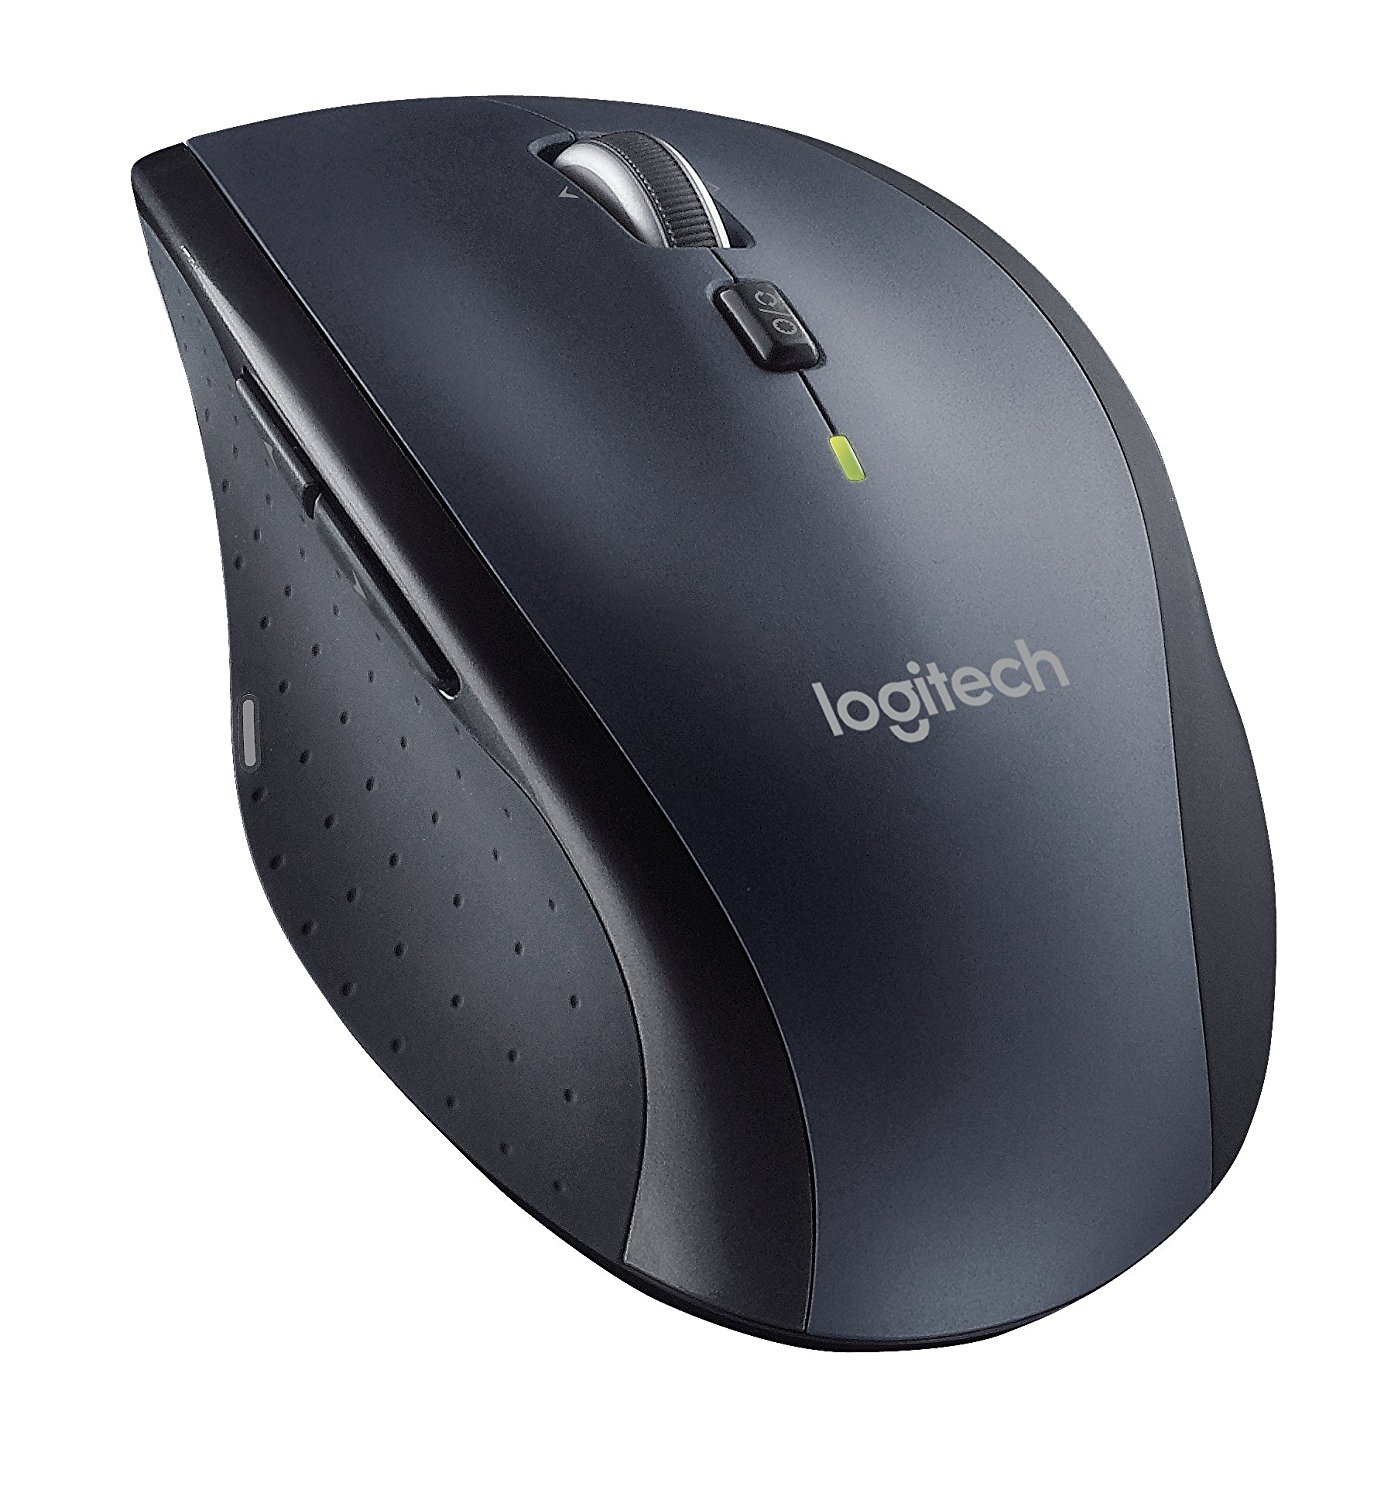 Logitech M705 wireless marathon mouse for $20